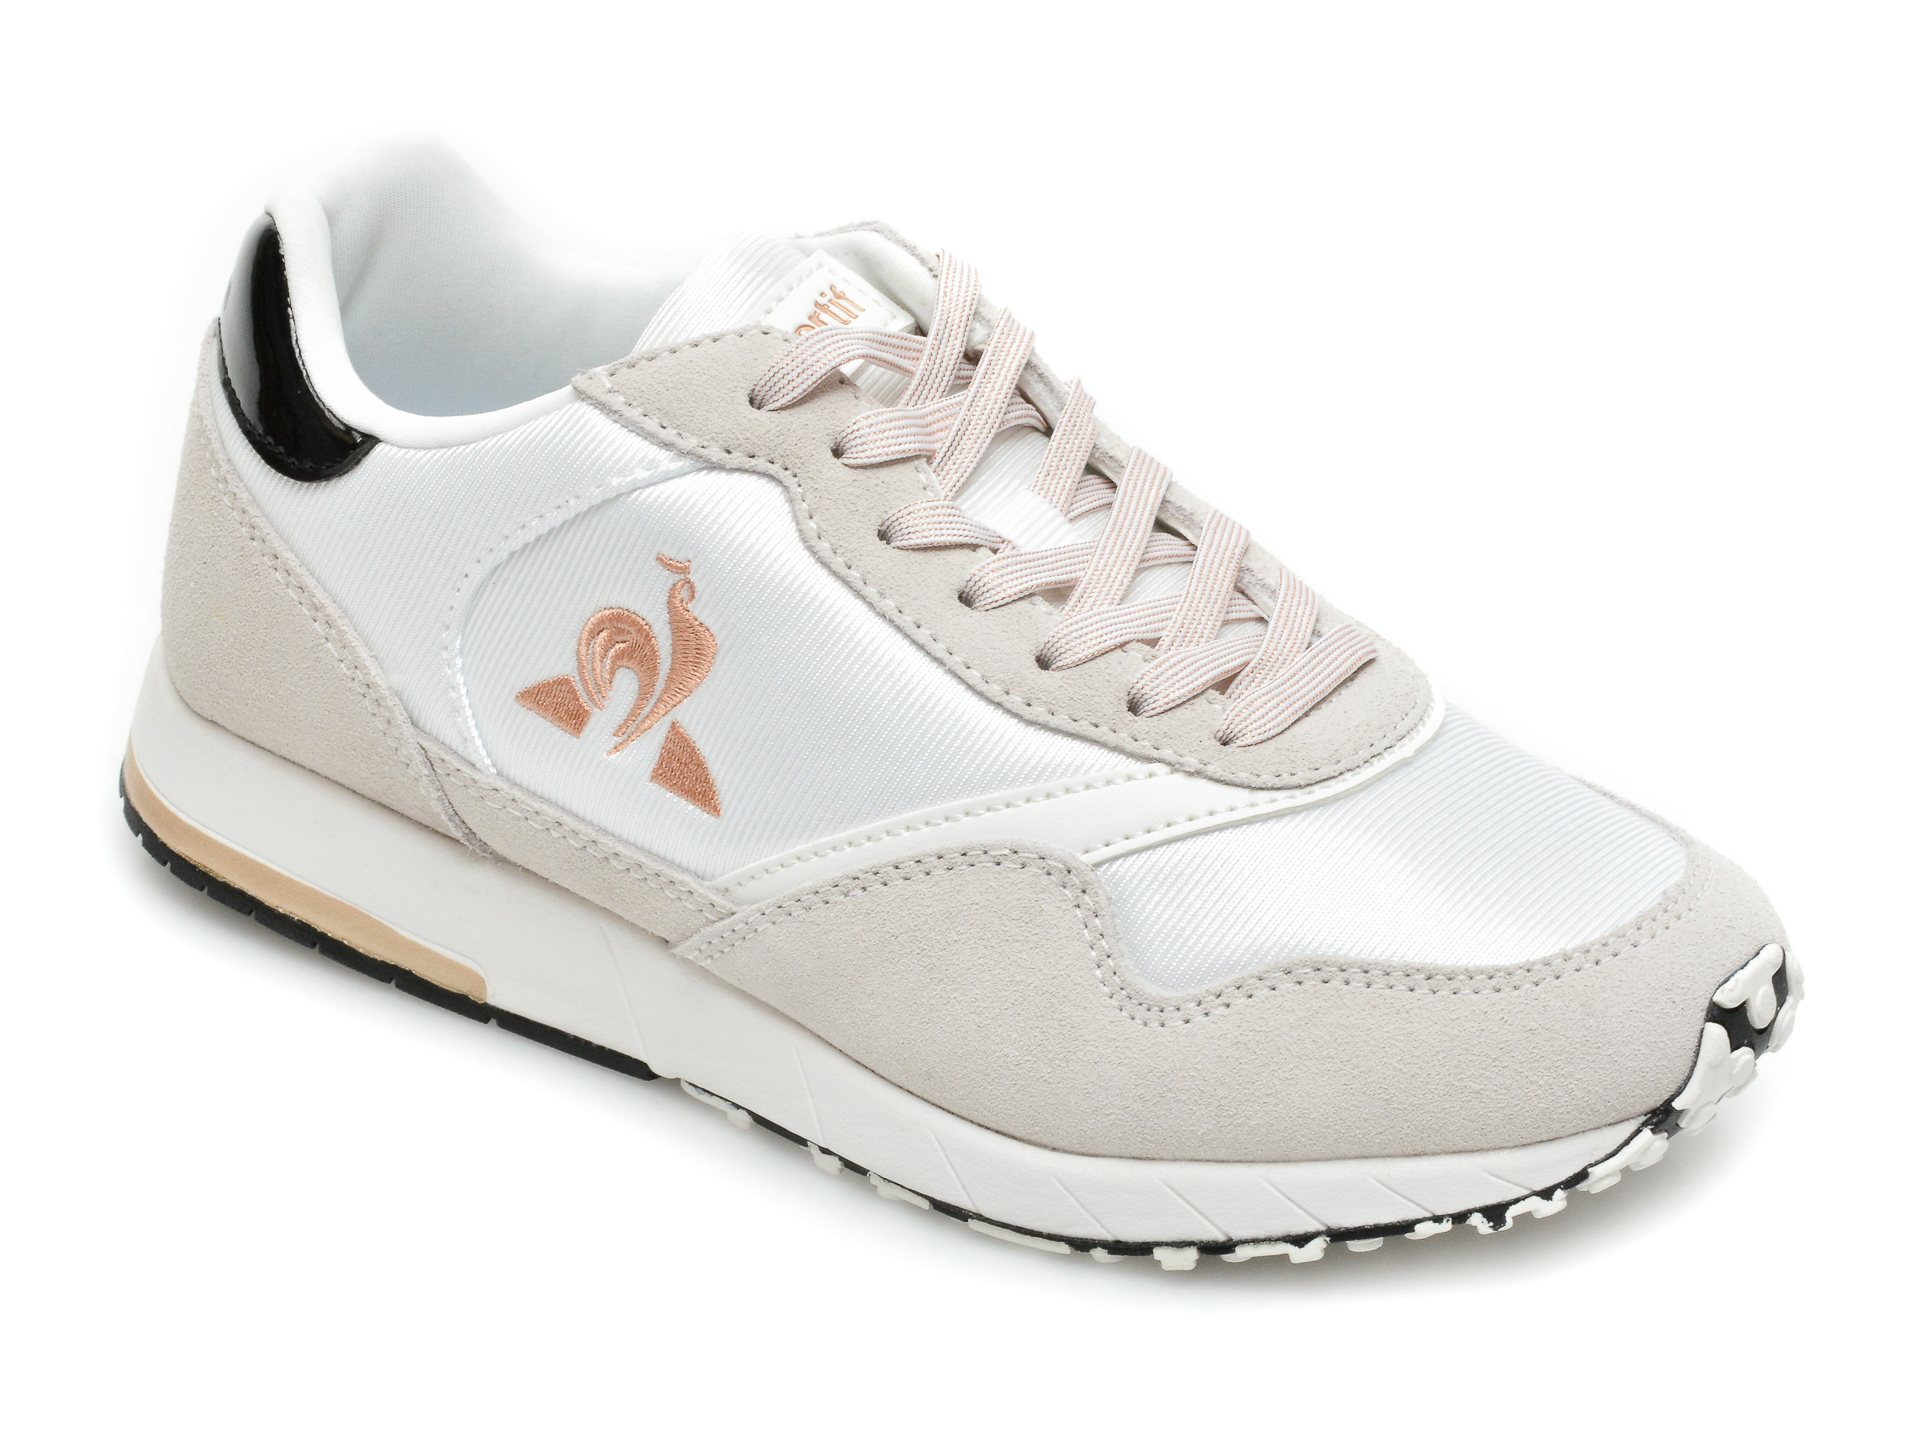 Pantofi sport LE COQ SPORTIF albi, Jazy W Patent, din material textil si piele naturala Le Coq Sportif